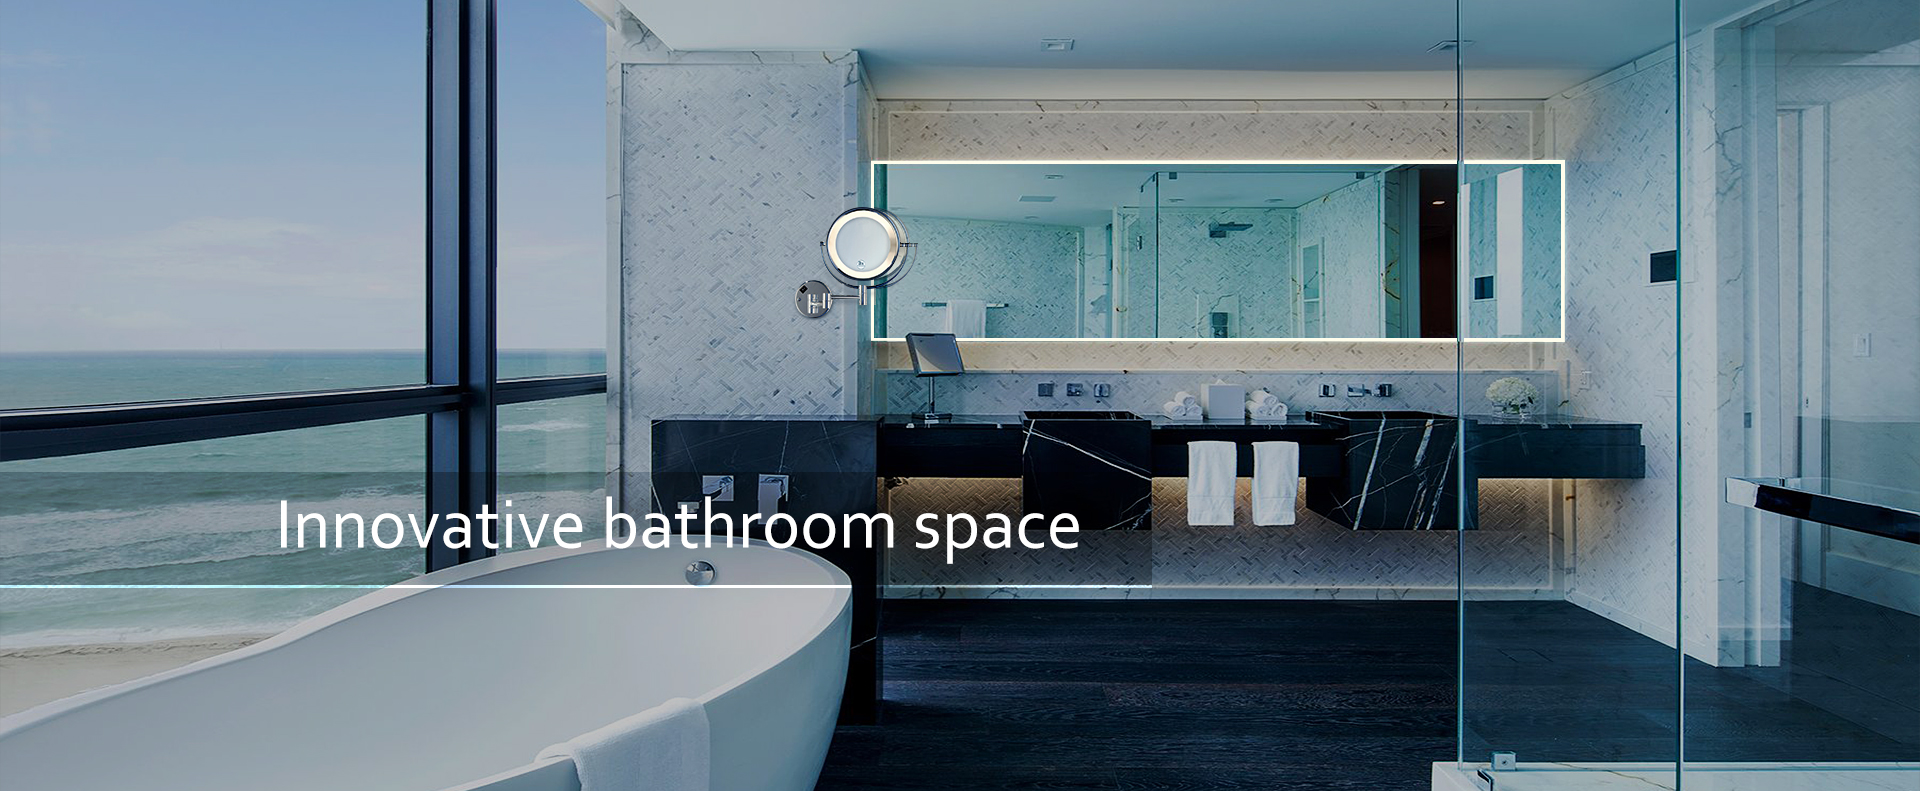 Innovative bathroom space